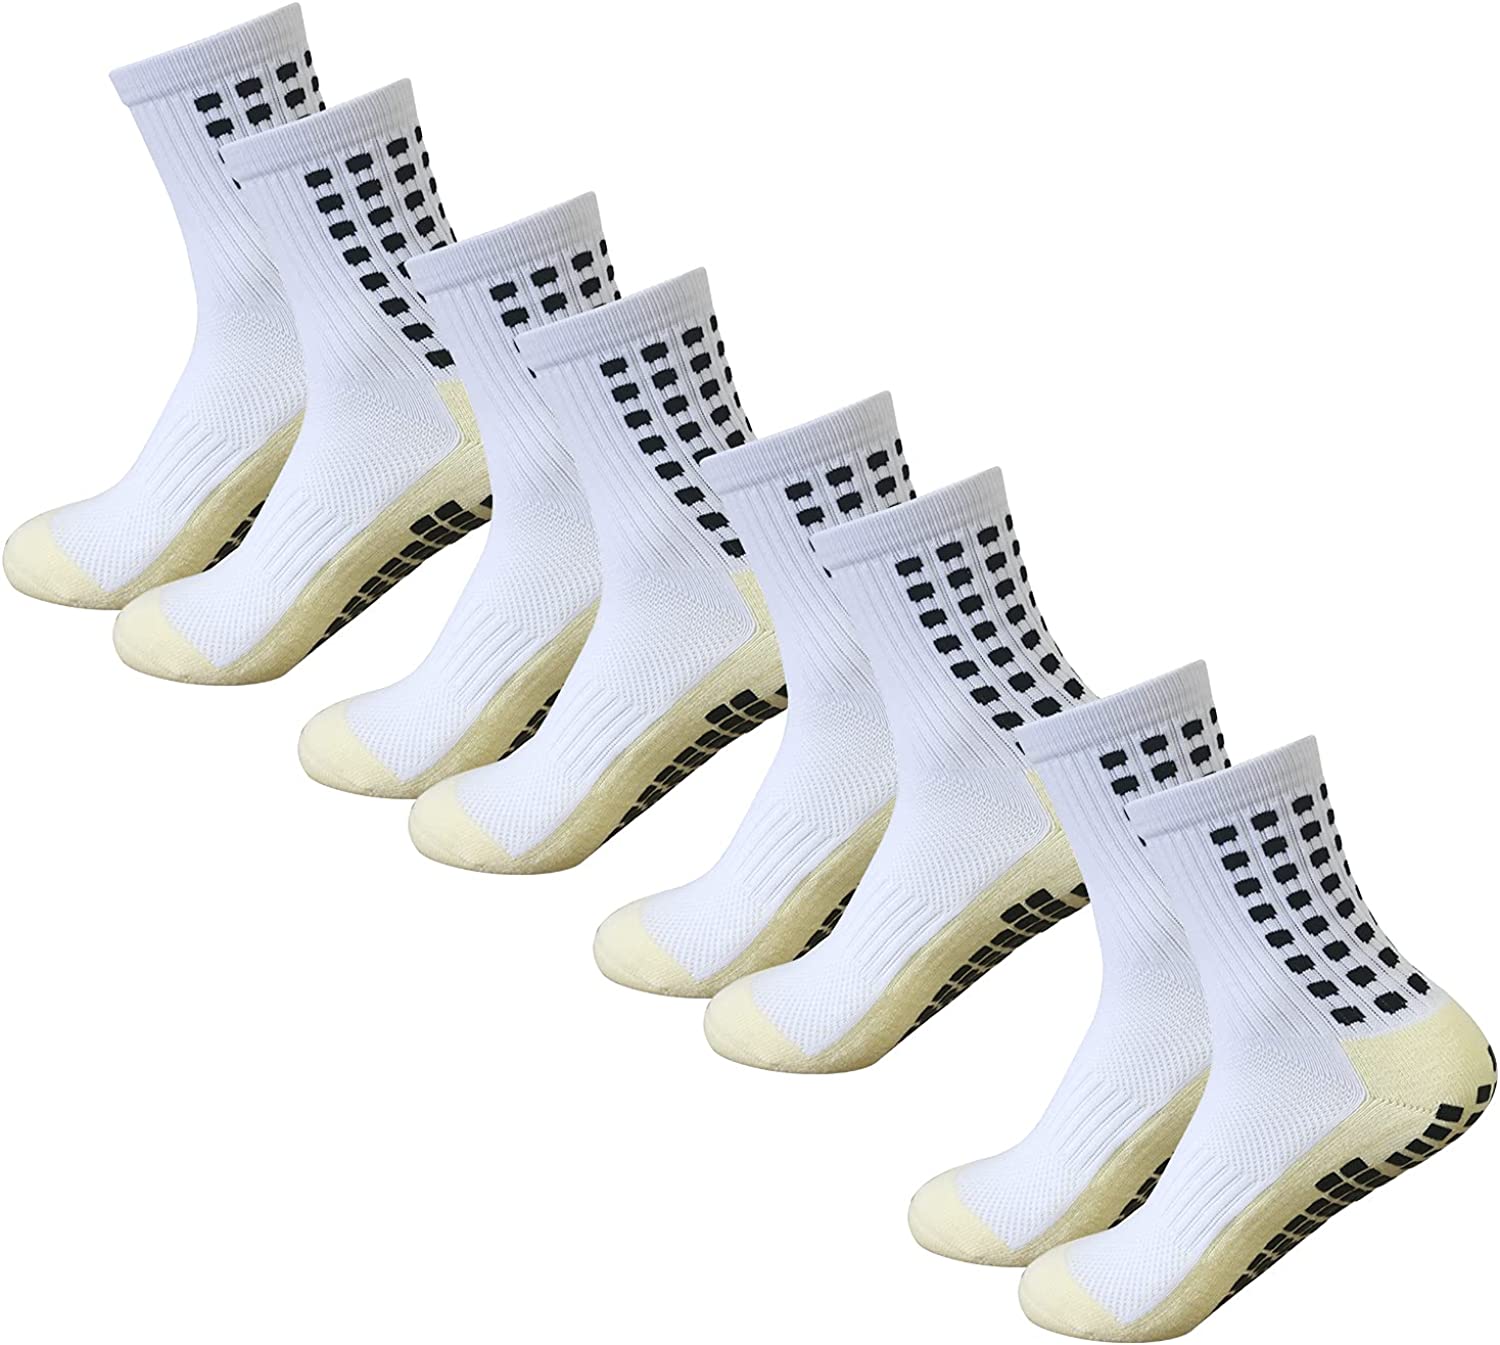  Ultrafun 5 Pairs Mens Soccer Socks Grip Socks Soccer  Cushined Non Slip Grip Sports Football Basketball Socks